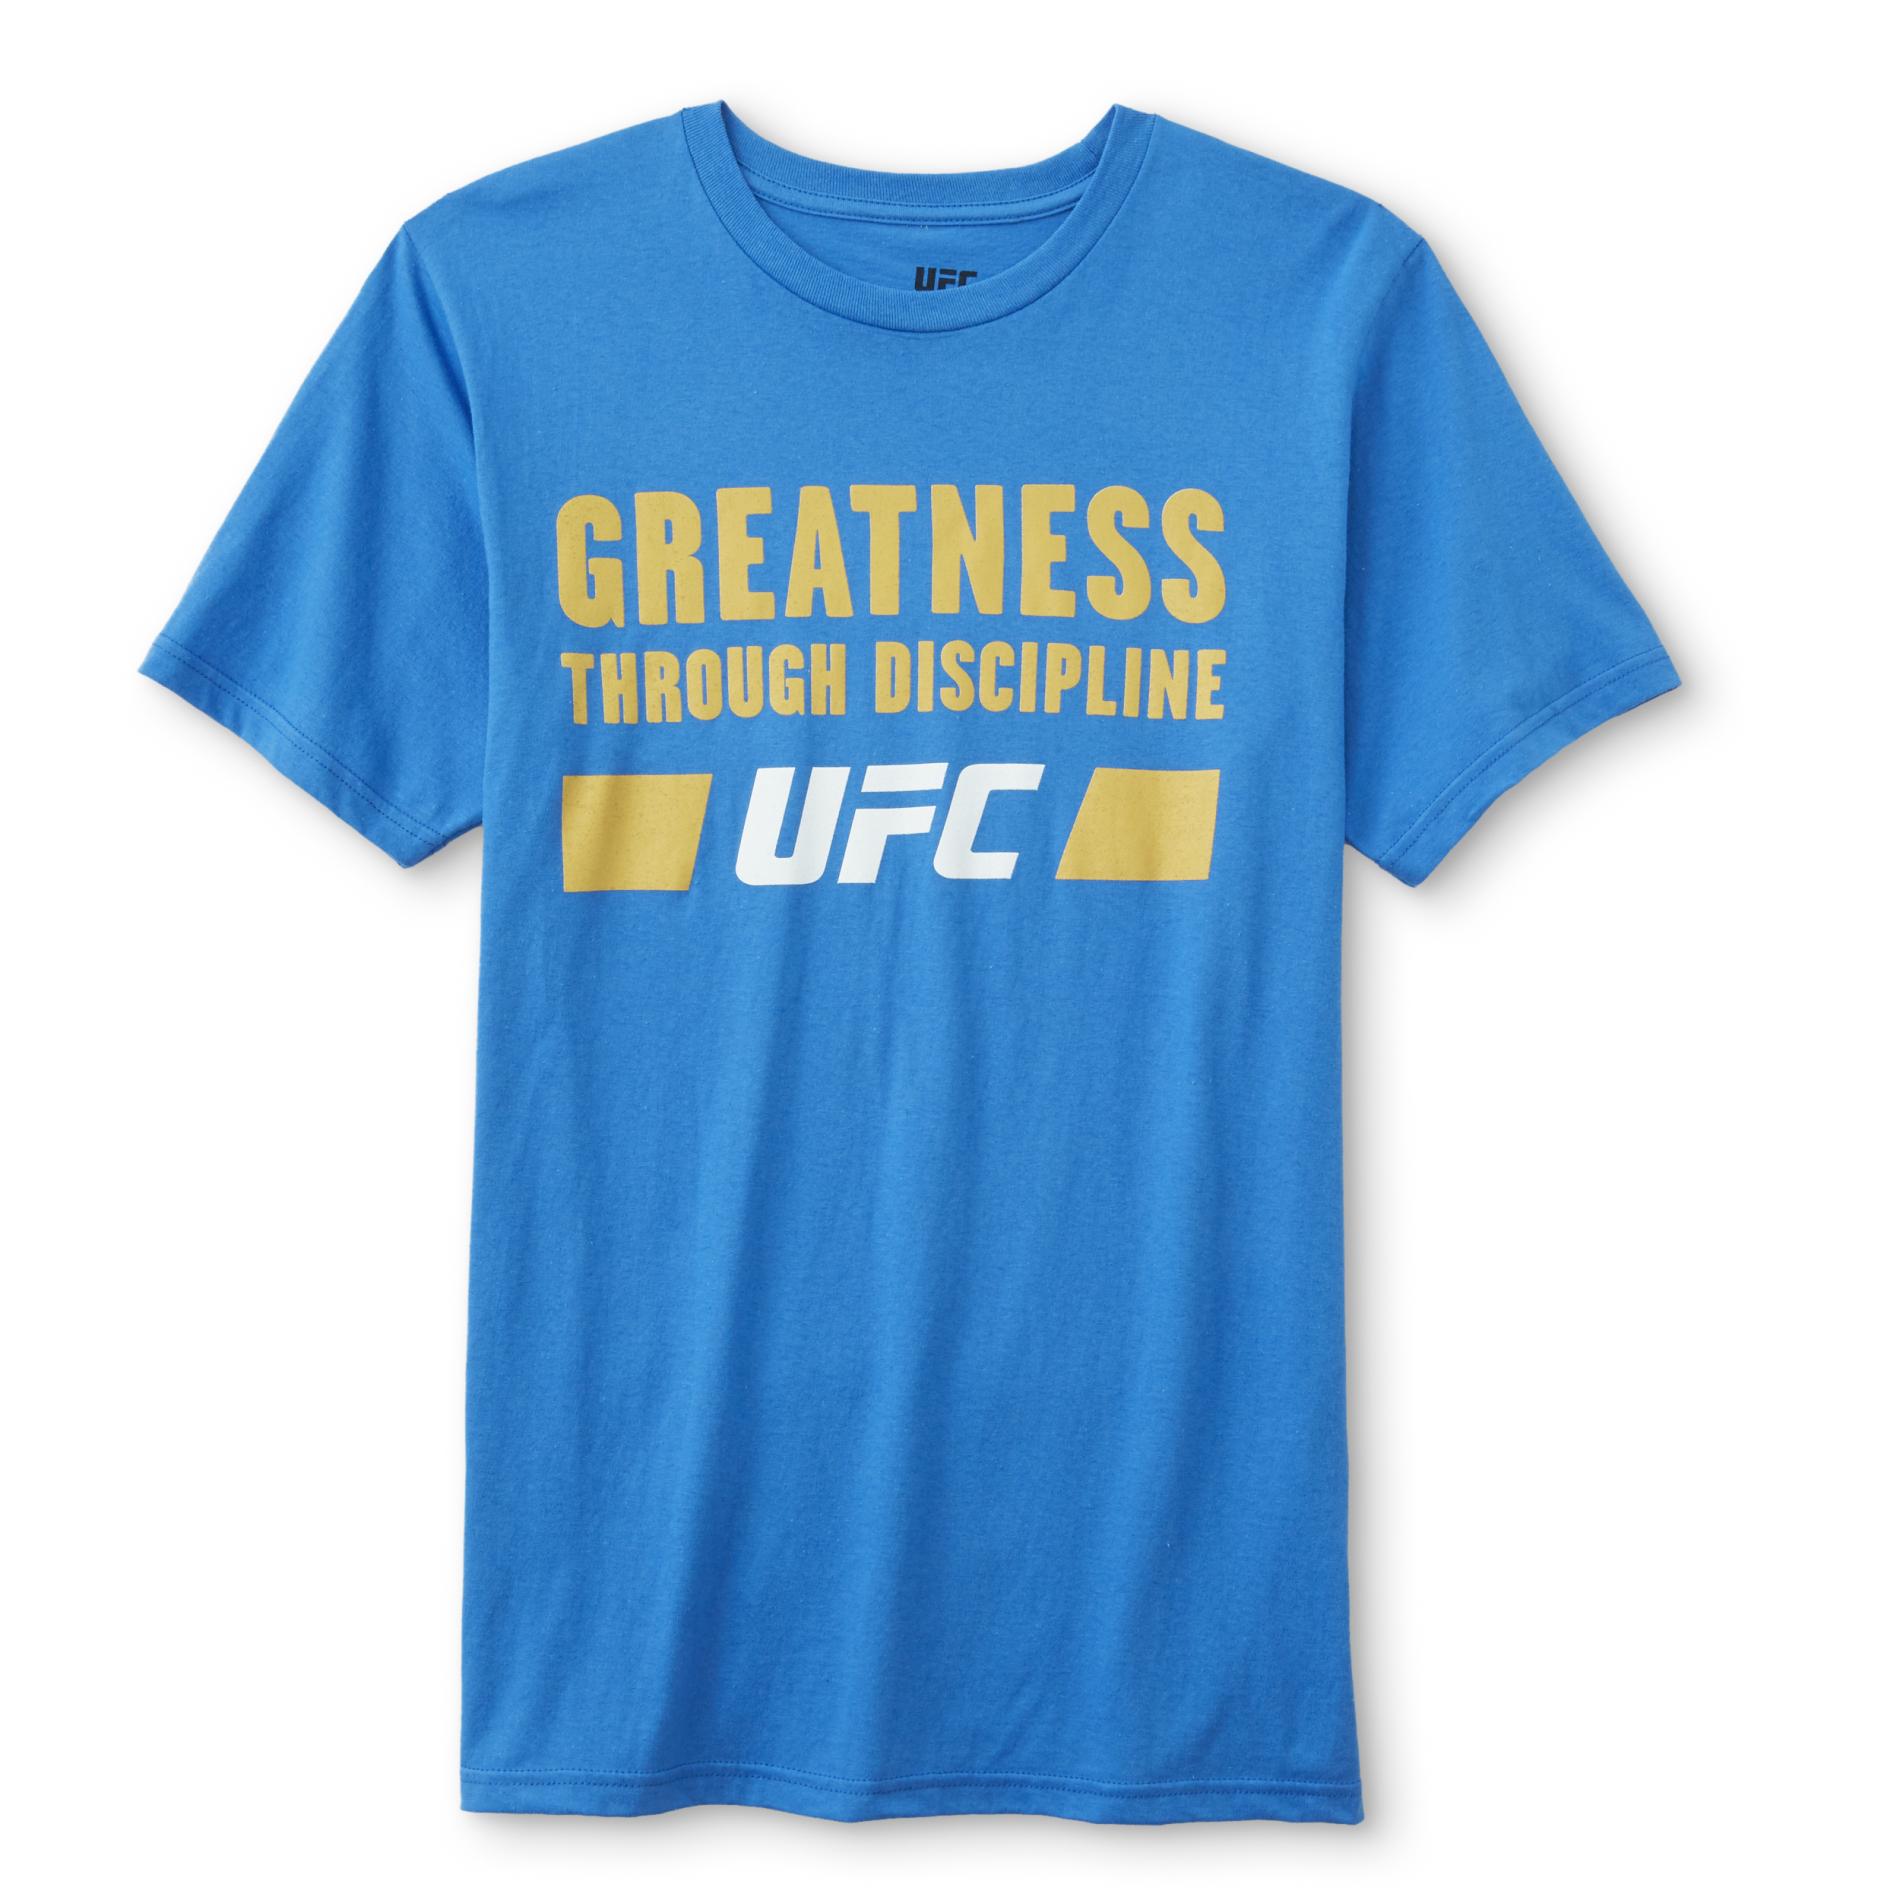 UFC Men's Graphic T-Shirt - Greatness Through Discipline